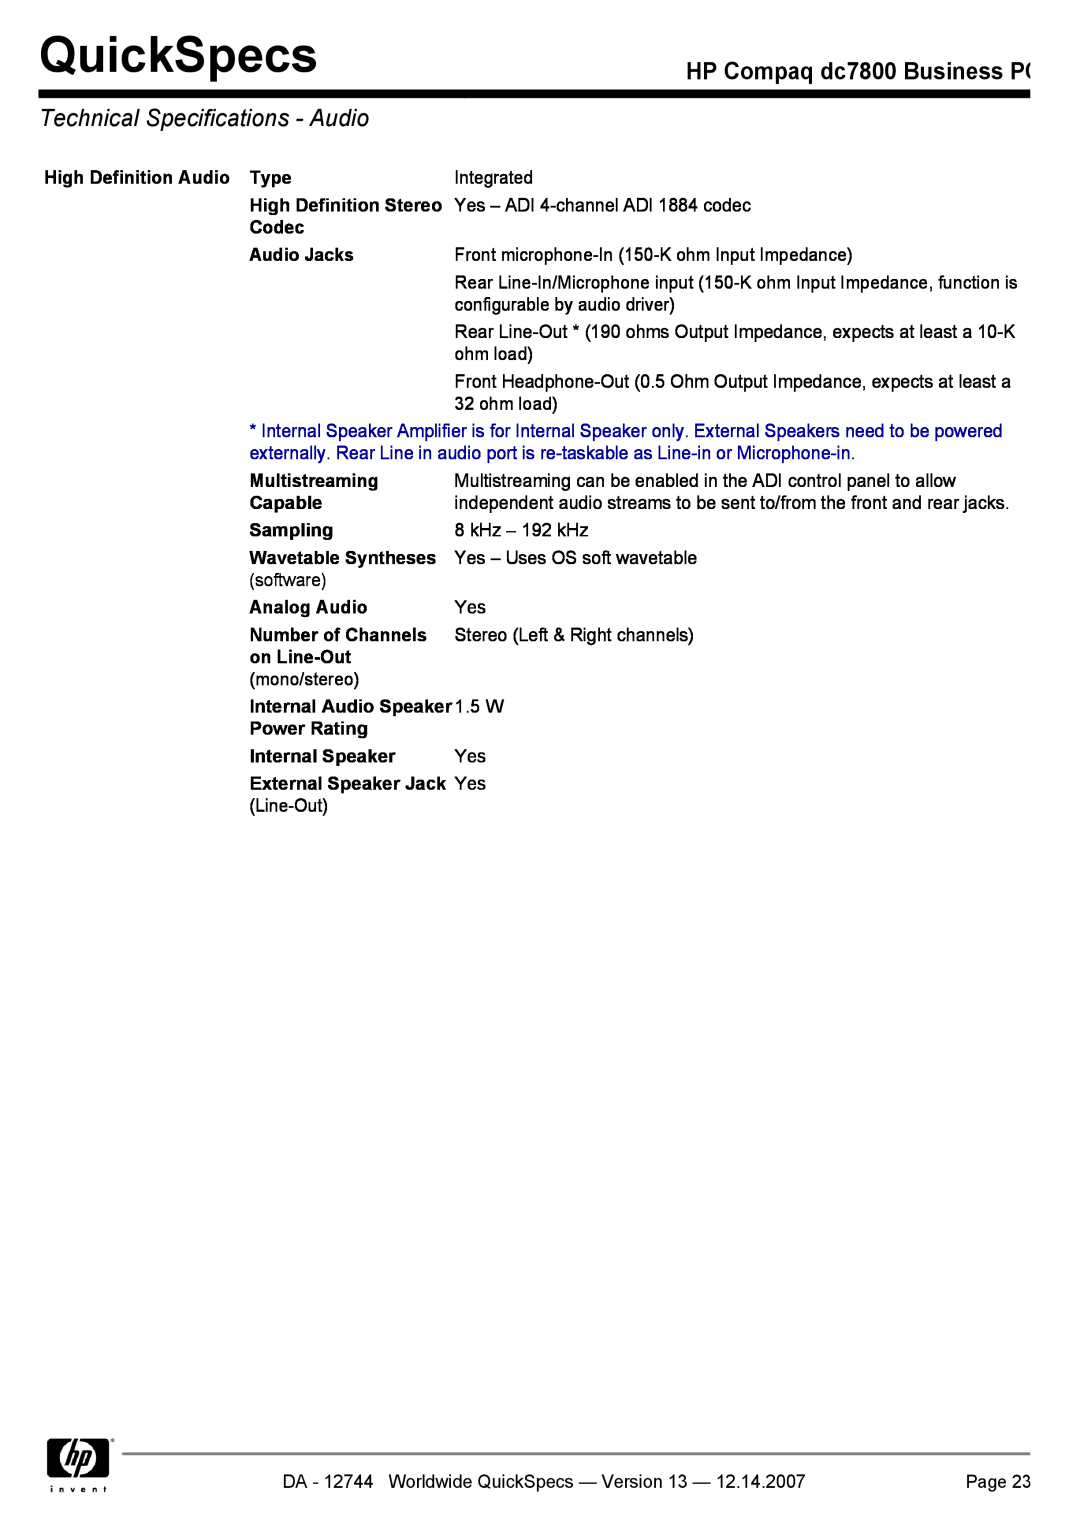 Compaq manual Technical Specifications - Audio, QuickSpecs, HP Compaq dc7800 Business PC 